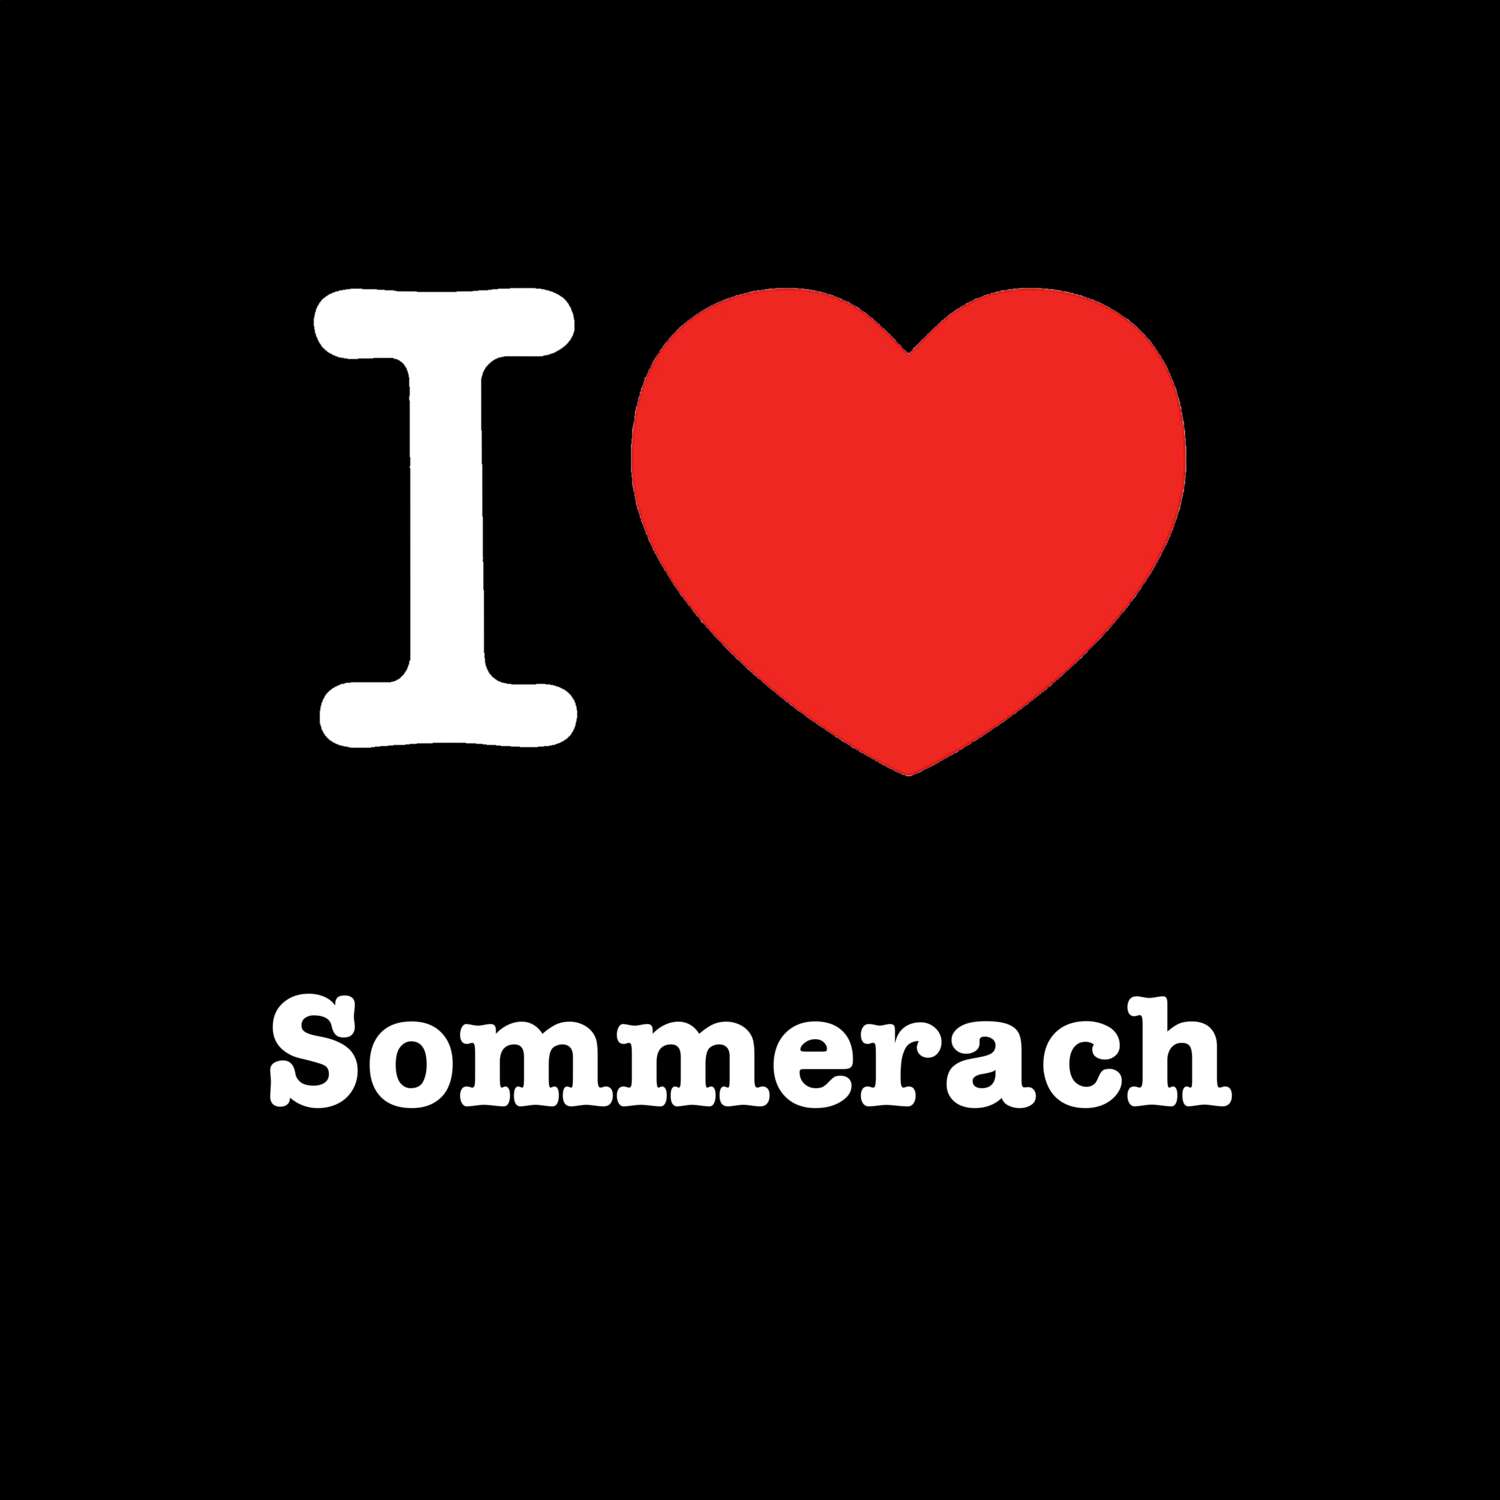 Sommerach T-Shirt »I love«